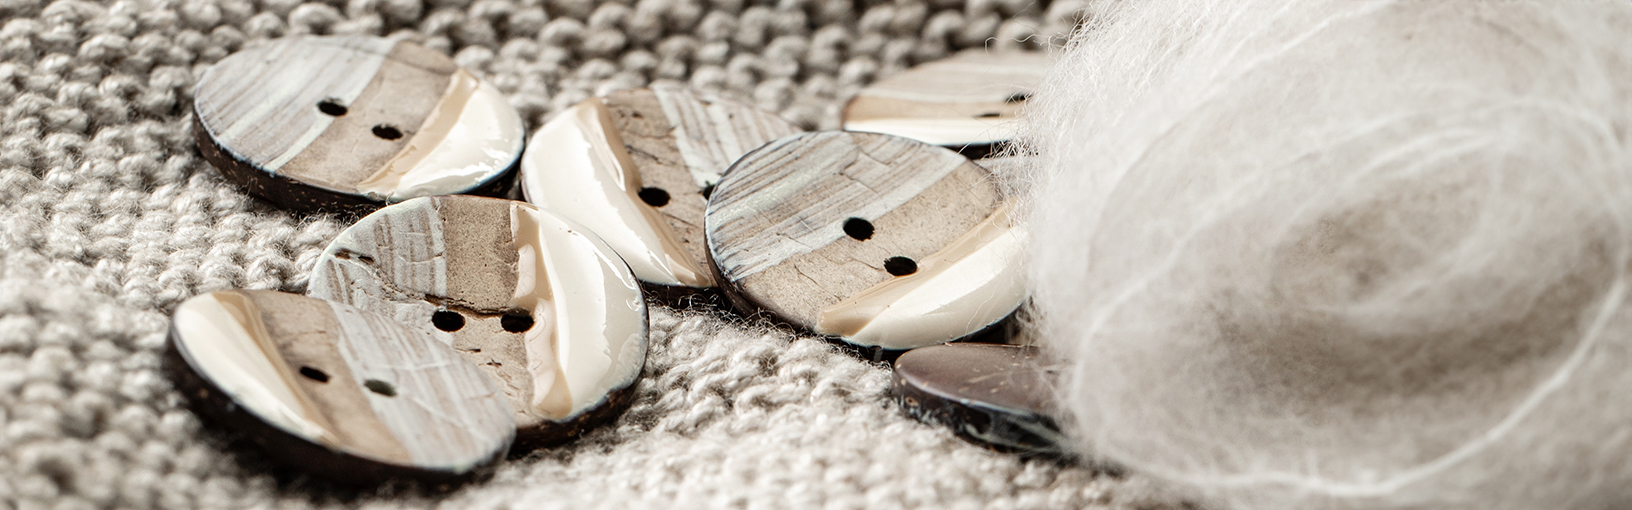 INNOVATIVE, ERGONOMIC - HIGHEST QUALITY Lana Grossa Needles | SOCK NEEDLES | % Design-wood Color %